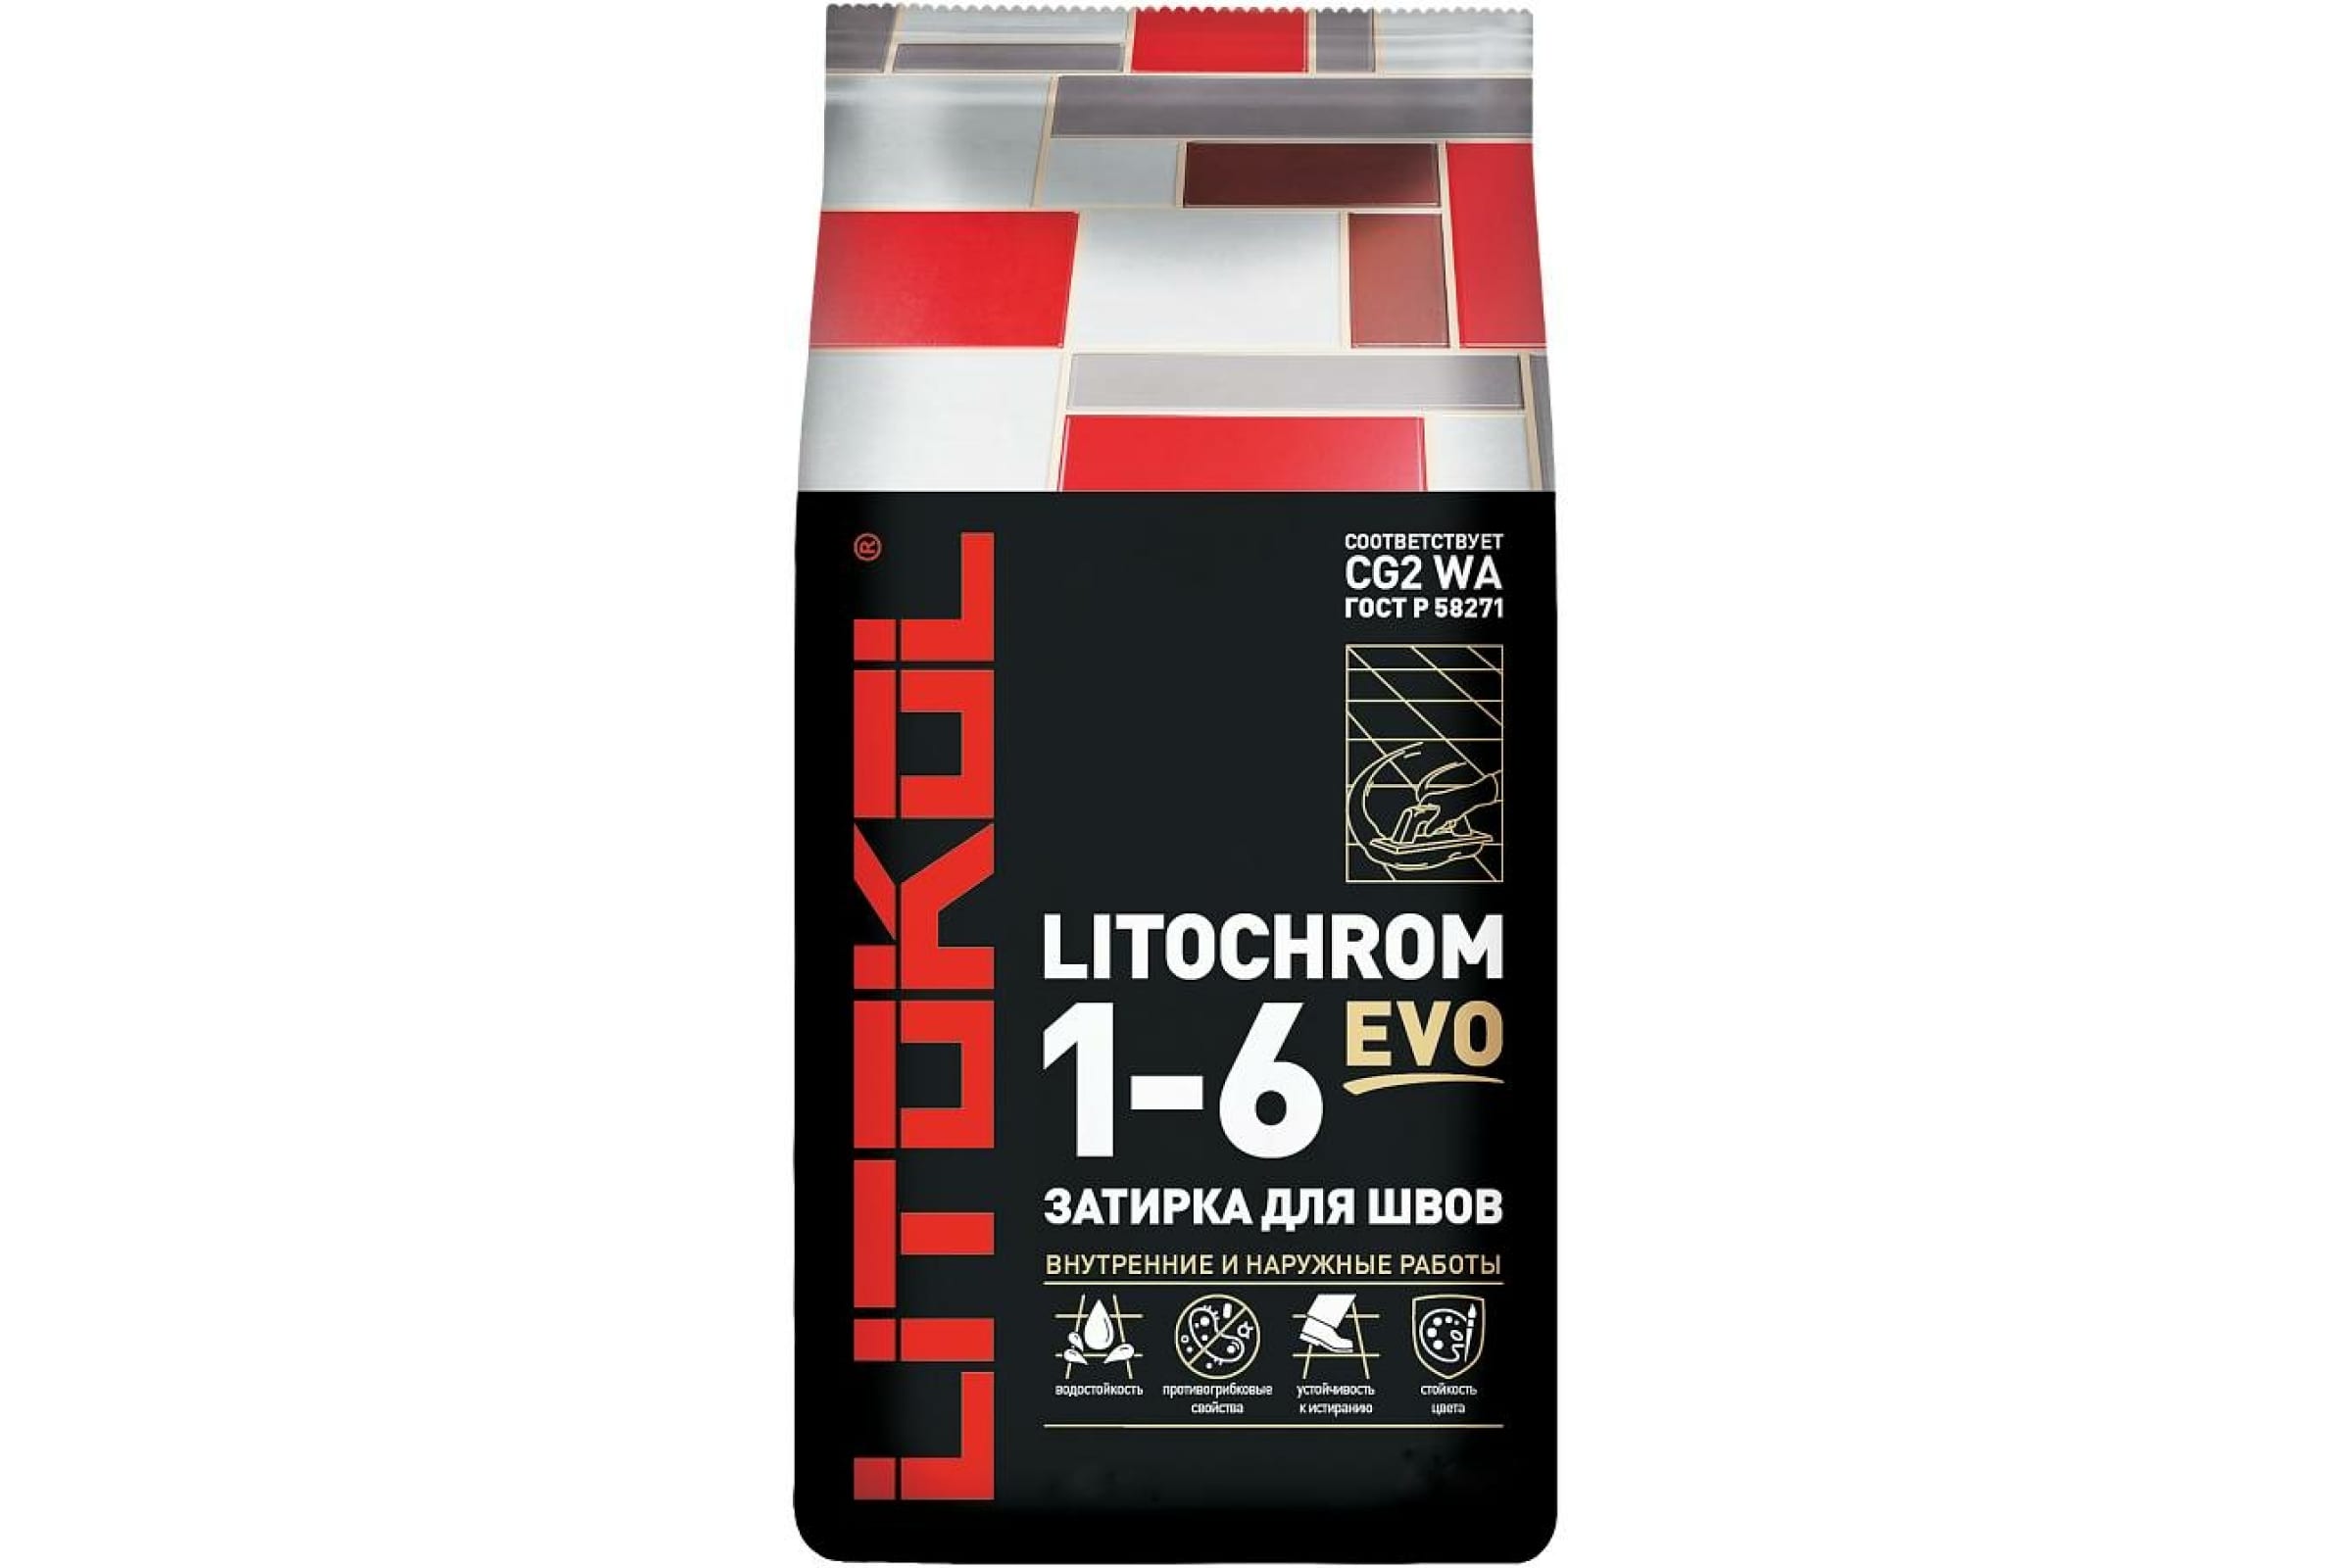 LITOKOL LITOCHROM 1-6 EVO LE 200 белый (5kg Al.bag) 500180003 litokol litochrom 1 6 evo le 200 белый 5kg al bag 500180003